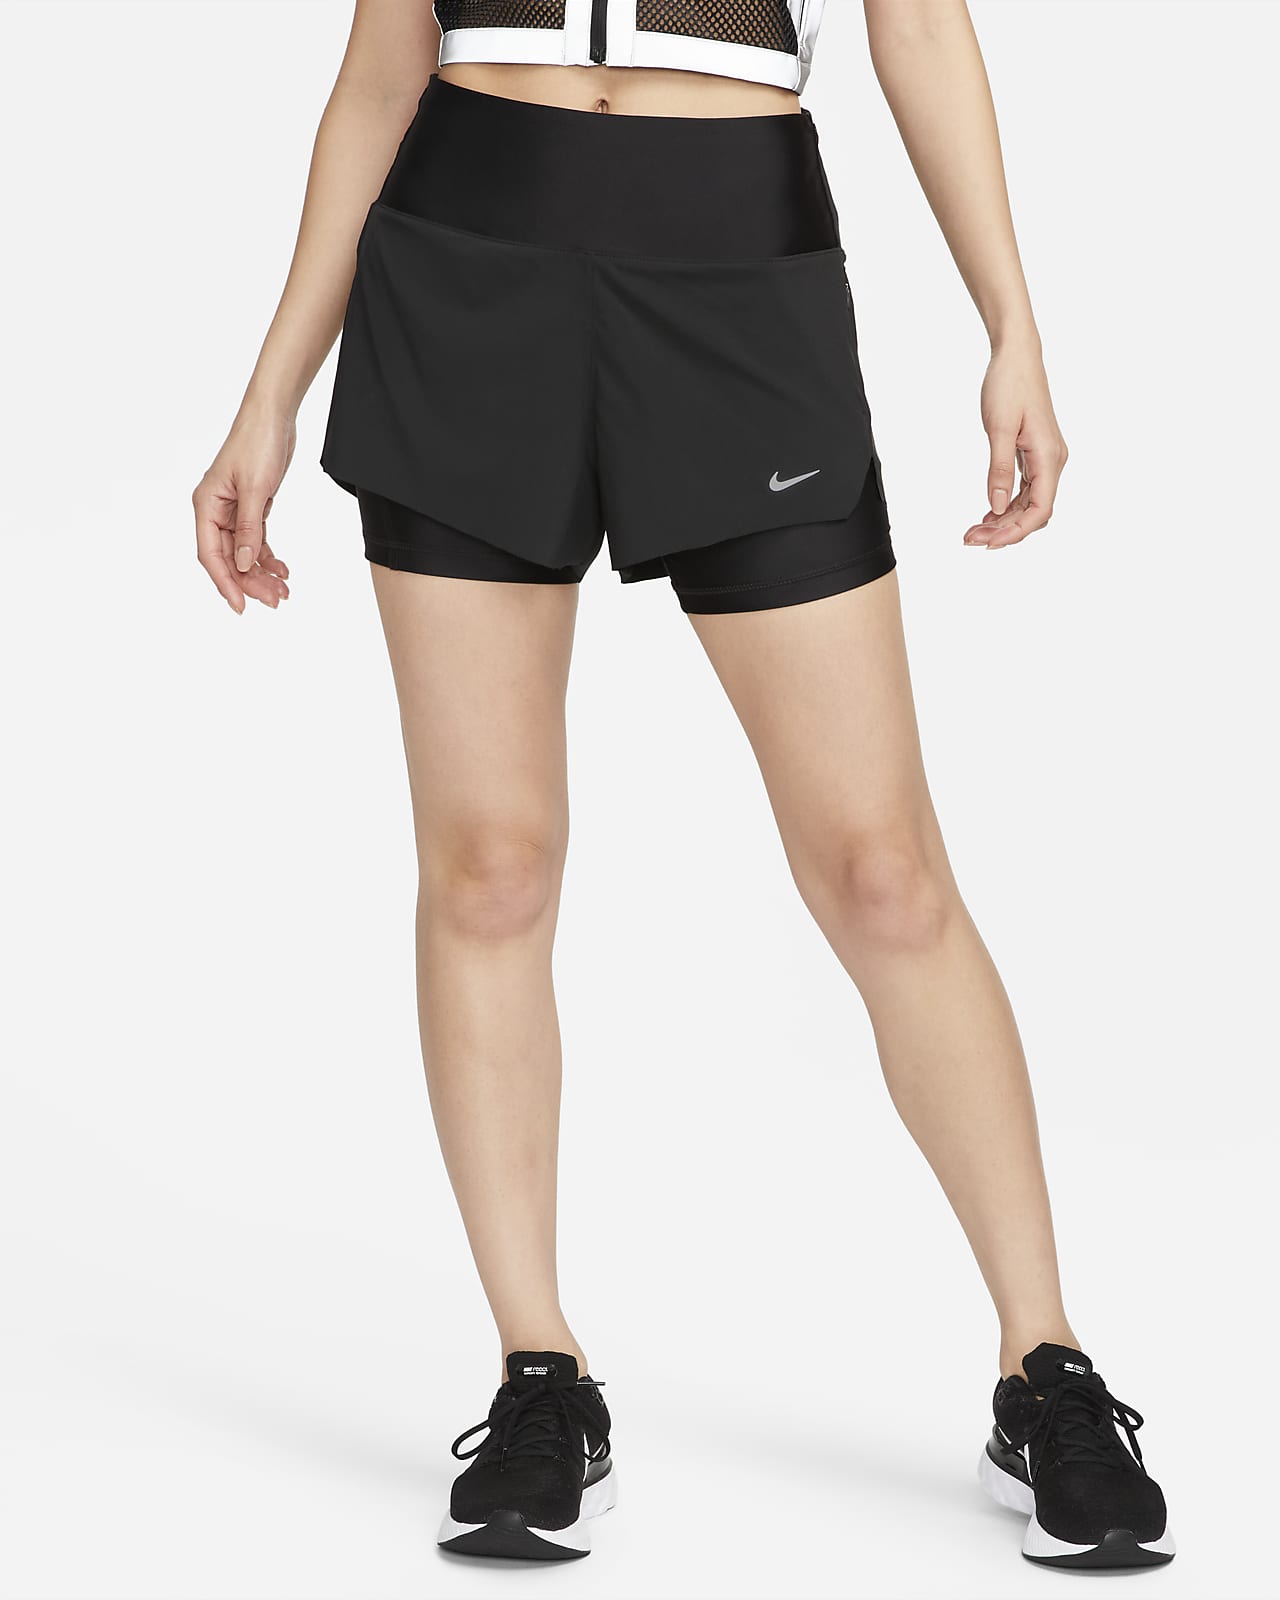 Nike Women's Dri-FIT Swift Mid-Rise Running Pants